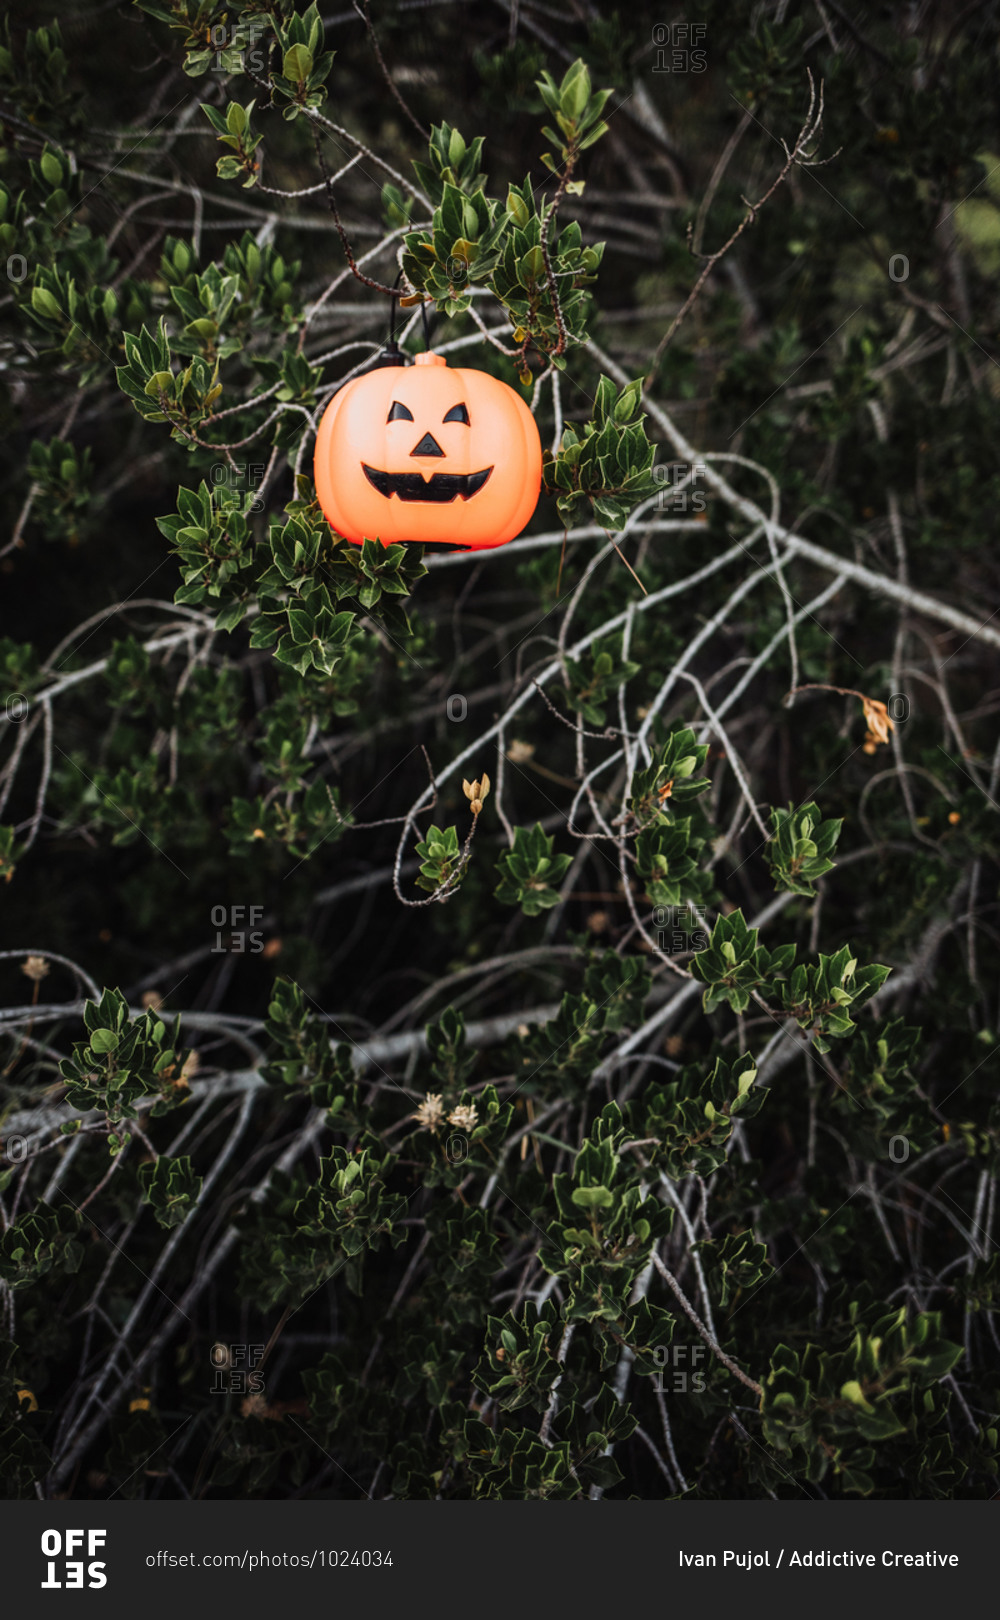 Illuminated lantern in shape of evil pumpkin hanging on tree in park during Halloween